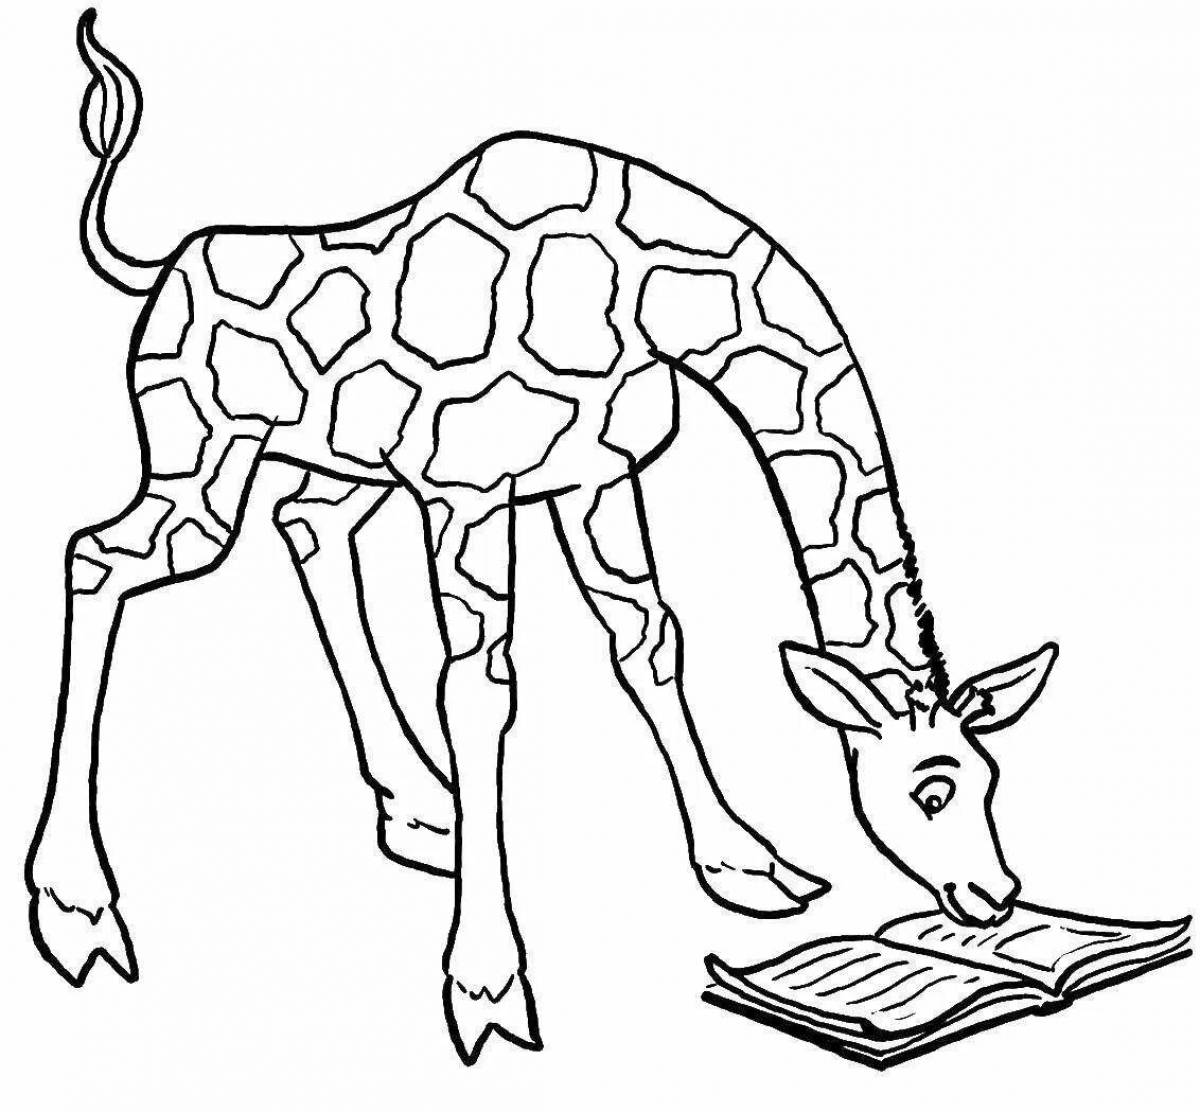 Sweet giraffe drawing for kids